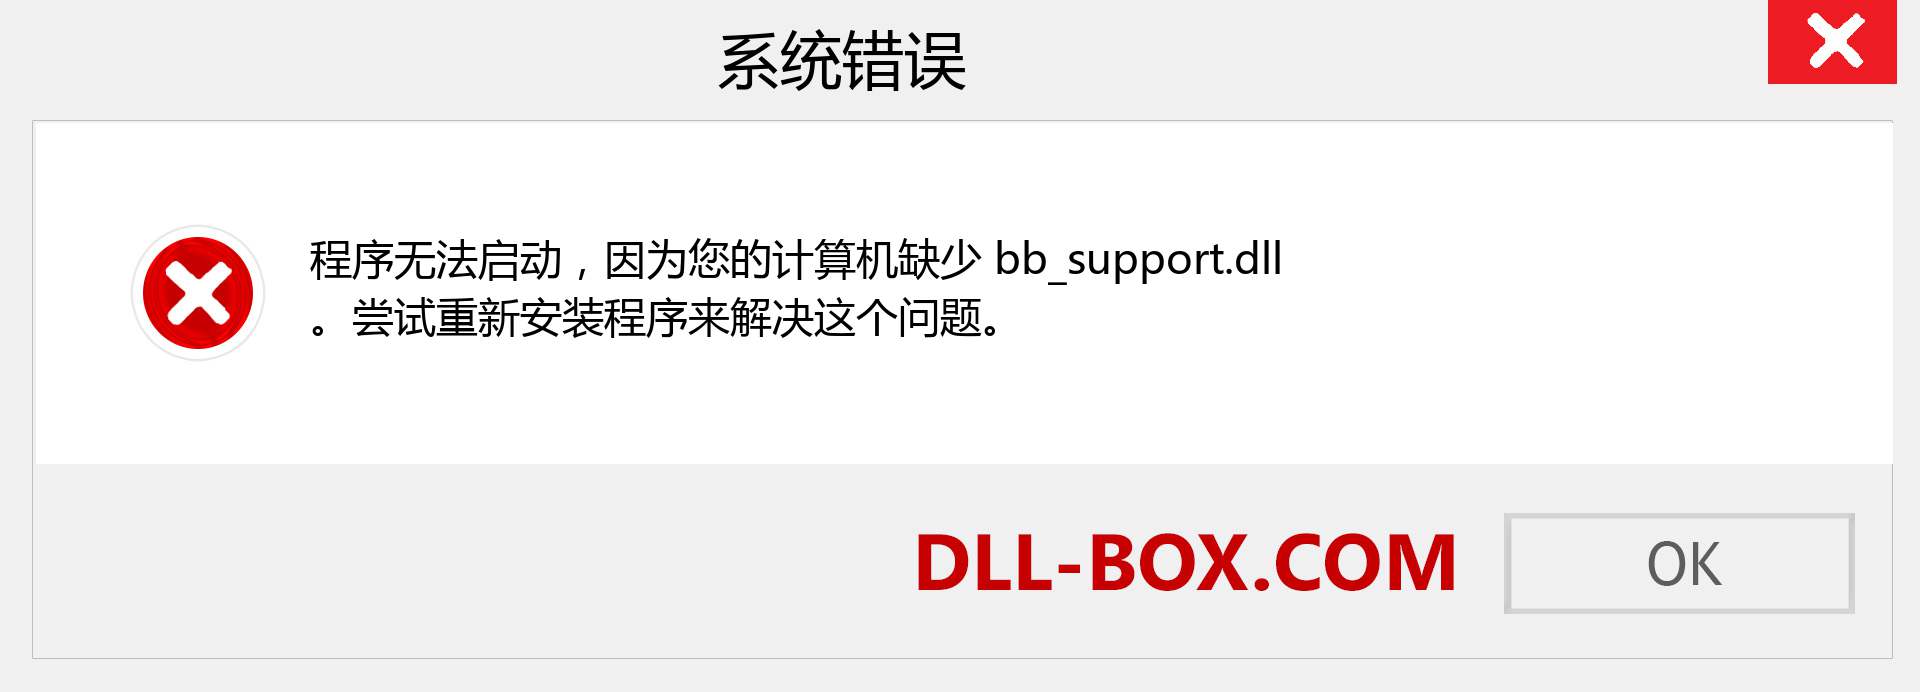 bb_support.dll 文件丢失？。 适用于 Windows 7、8、10 的下载 - 修复 Windows、照片、图像上的 bb_support dll 丢失错误